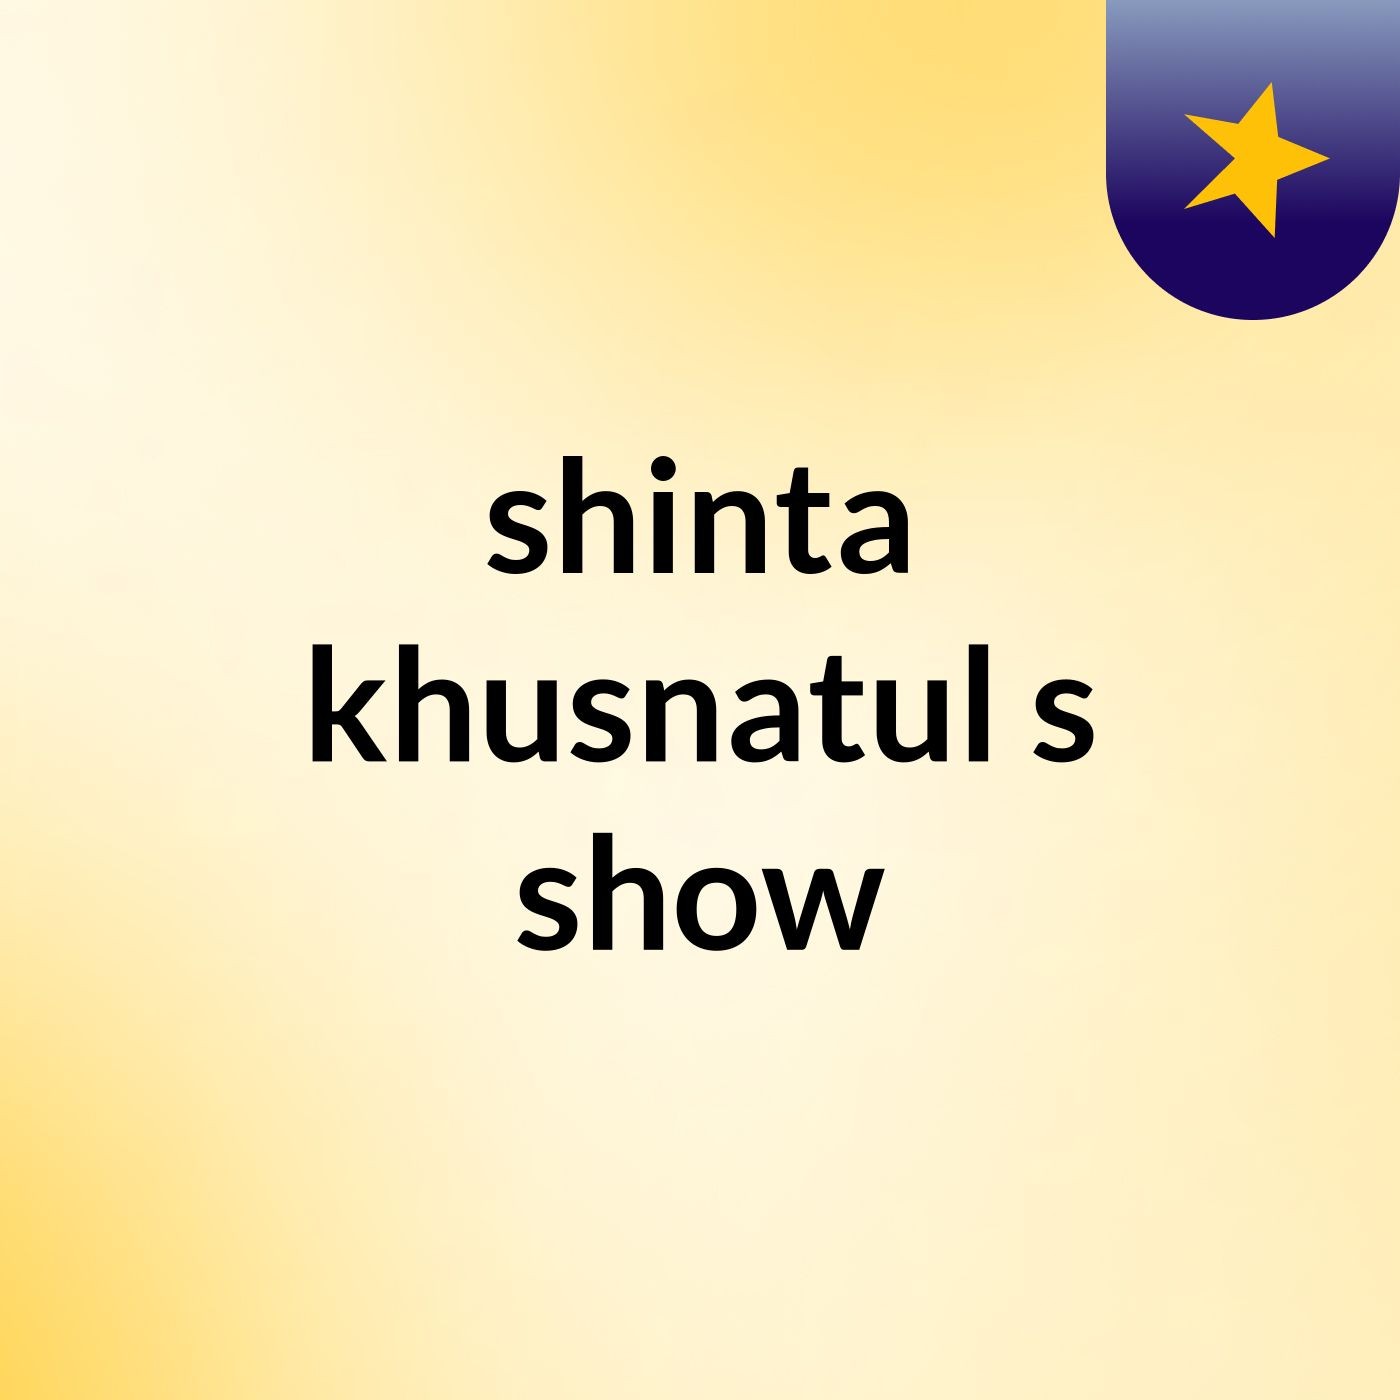 Episode 3 - shinta khusnatul's show